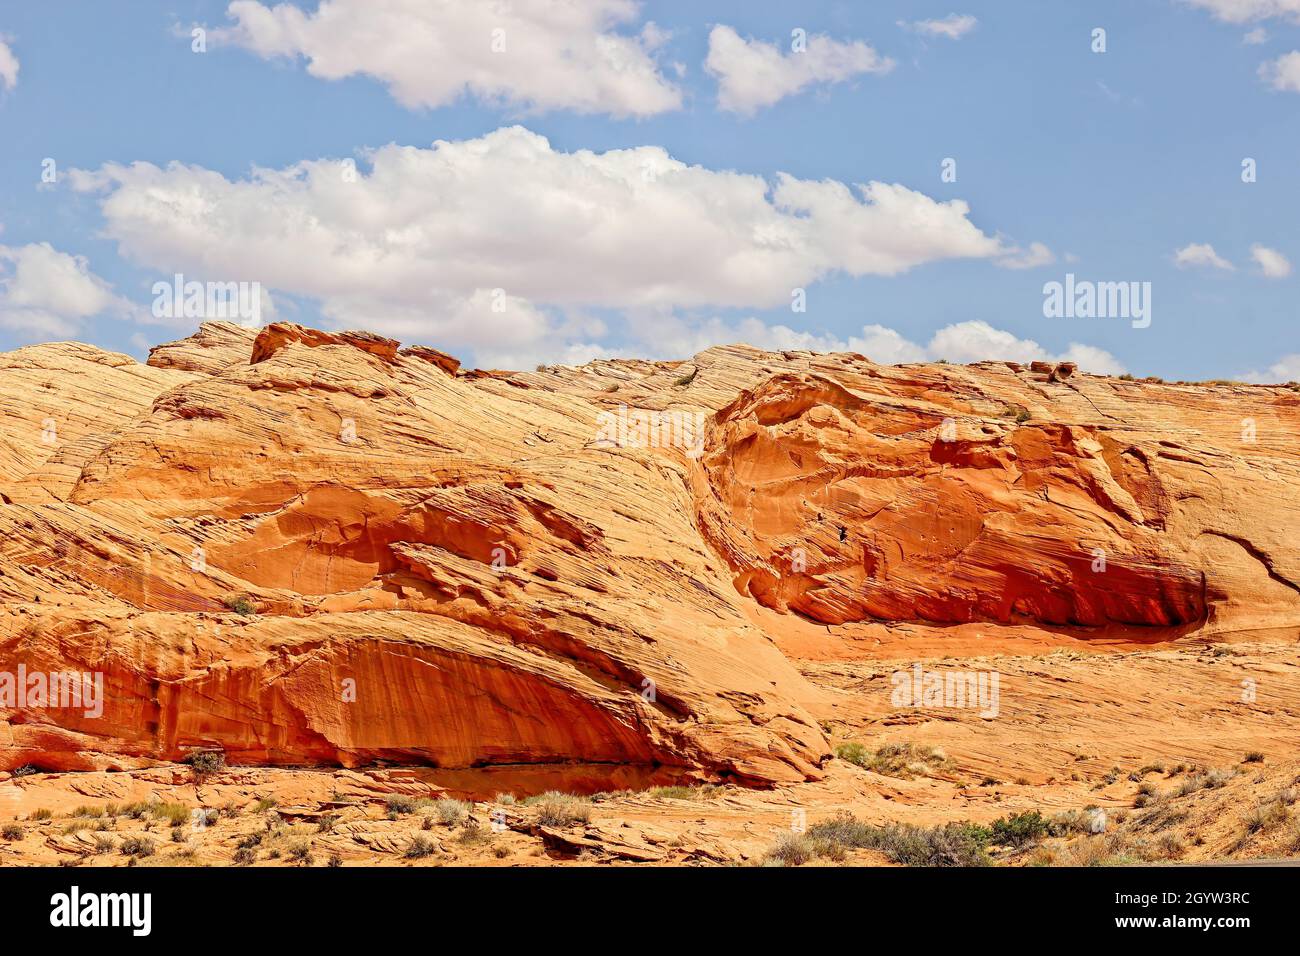 Arizona Rock Formation Showing Erosion And Striation Stock Photo